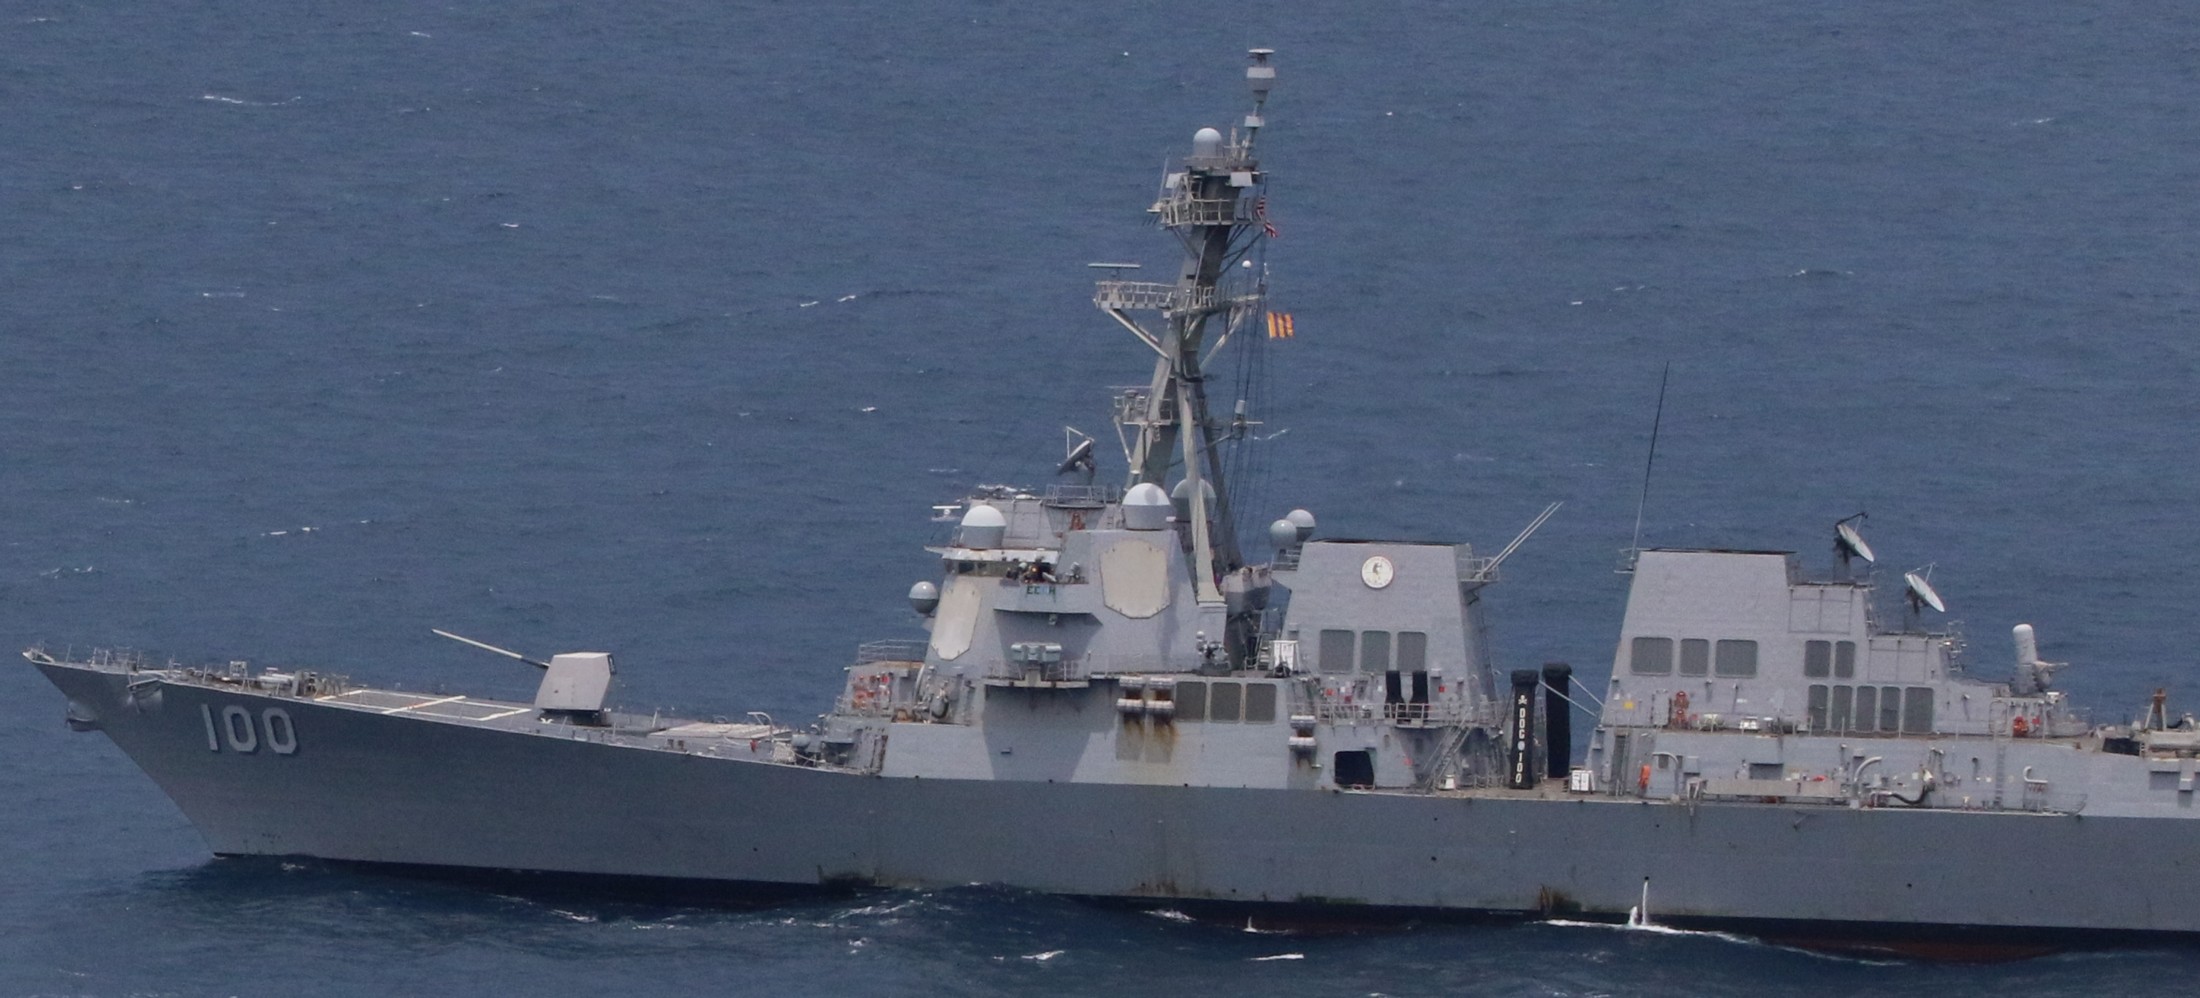 ddg-100 uss kidd arleigh burke class guided missile destroyer aegis us navy 57